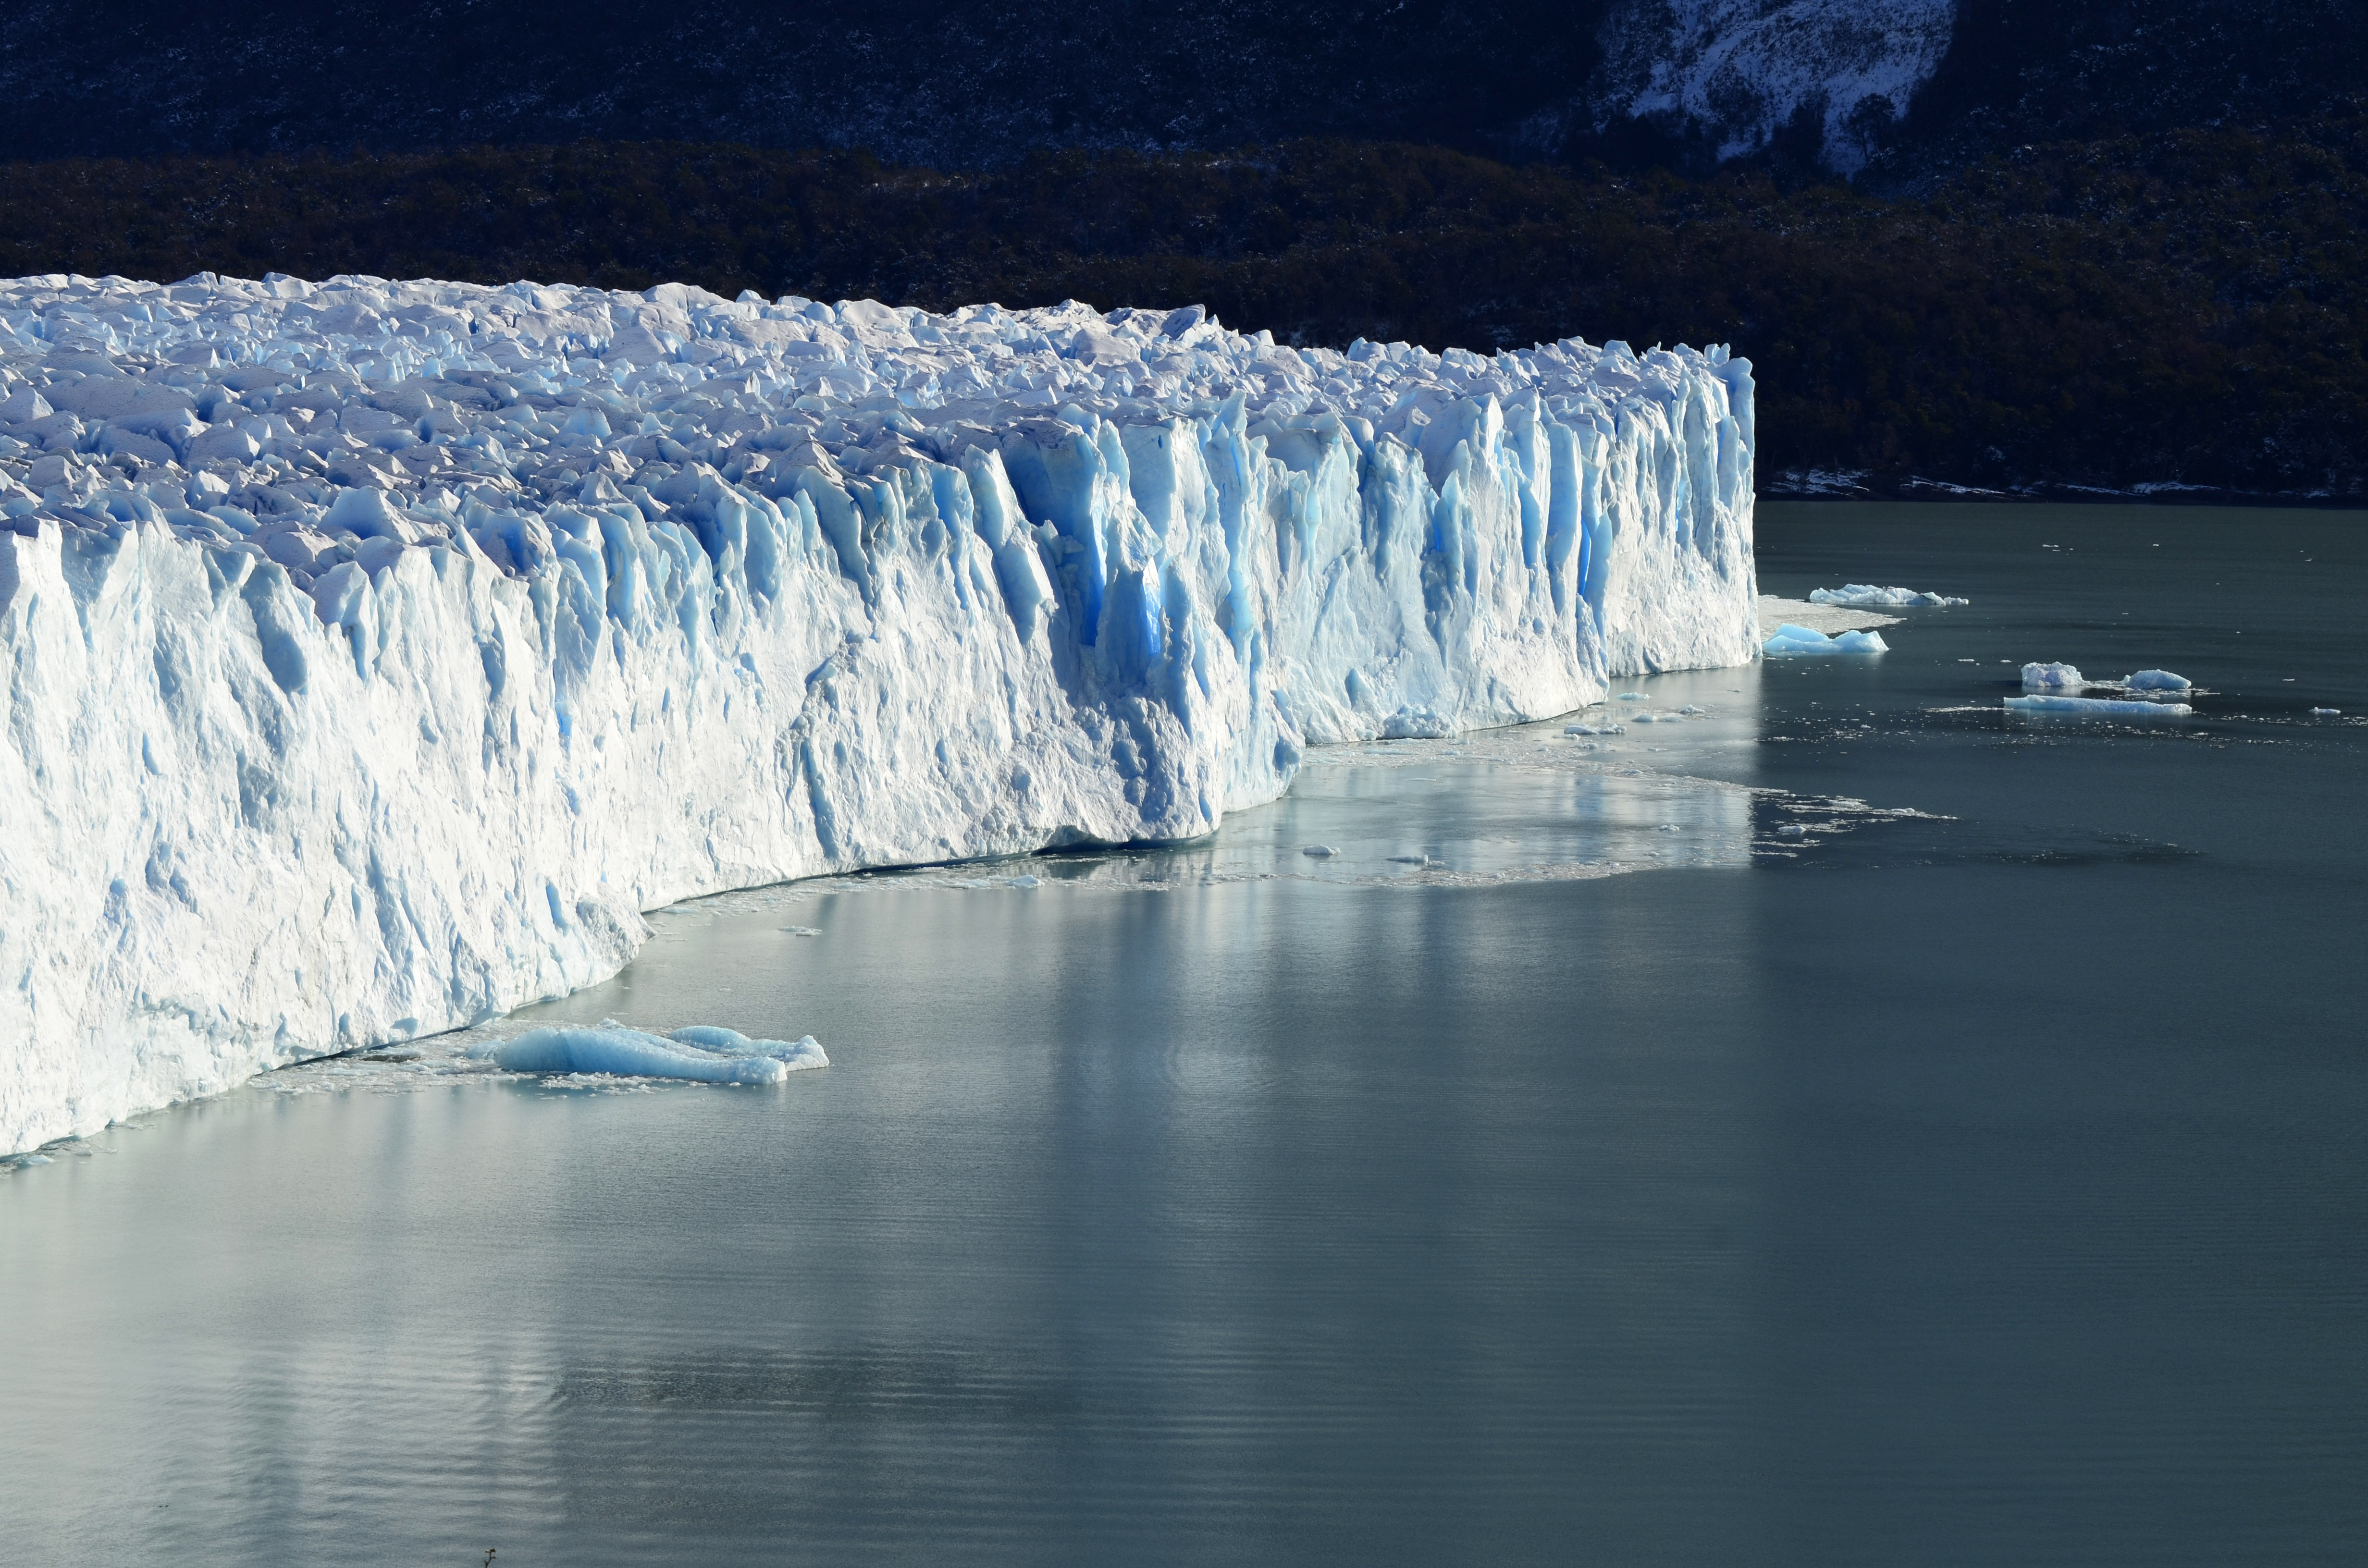 Лед 2 океан. Перито-Морено. Ледник Туэйтса. Ледники и айсберги. Таяние ледников в Антарктиде.